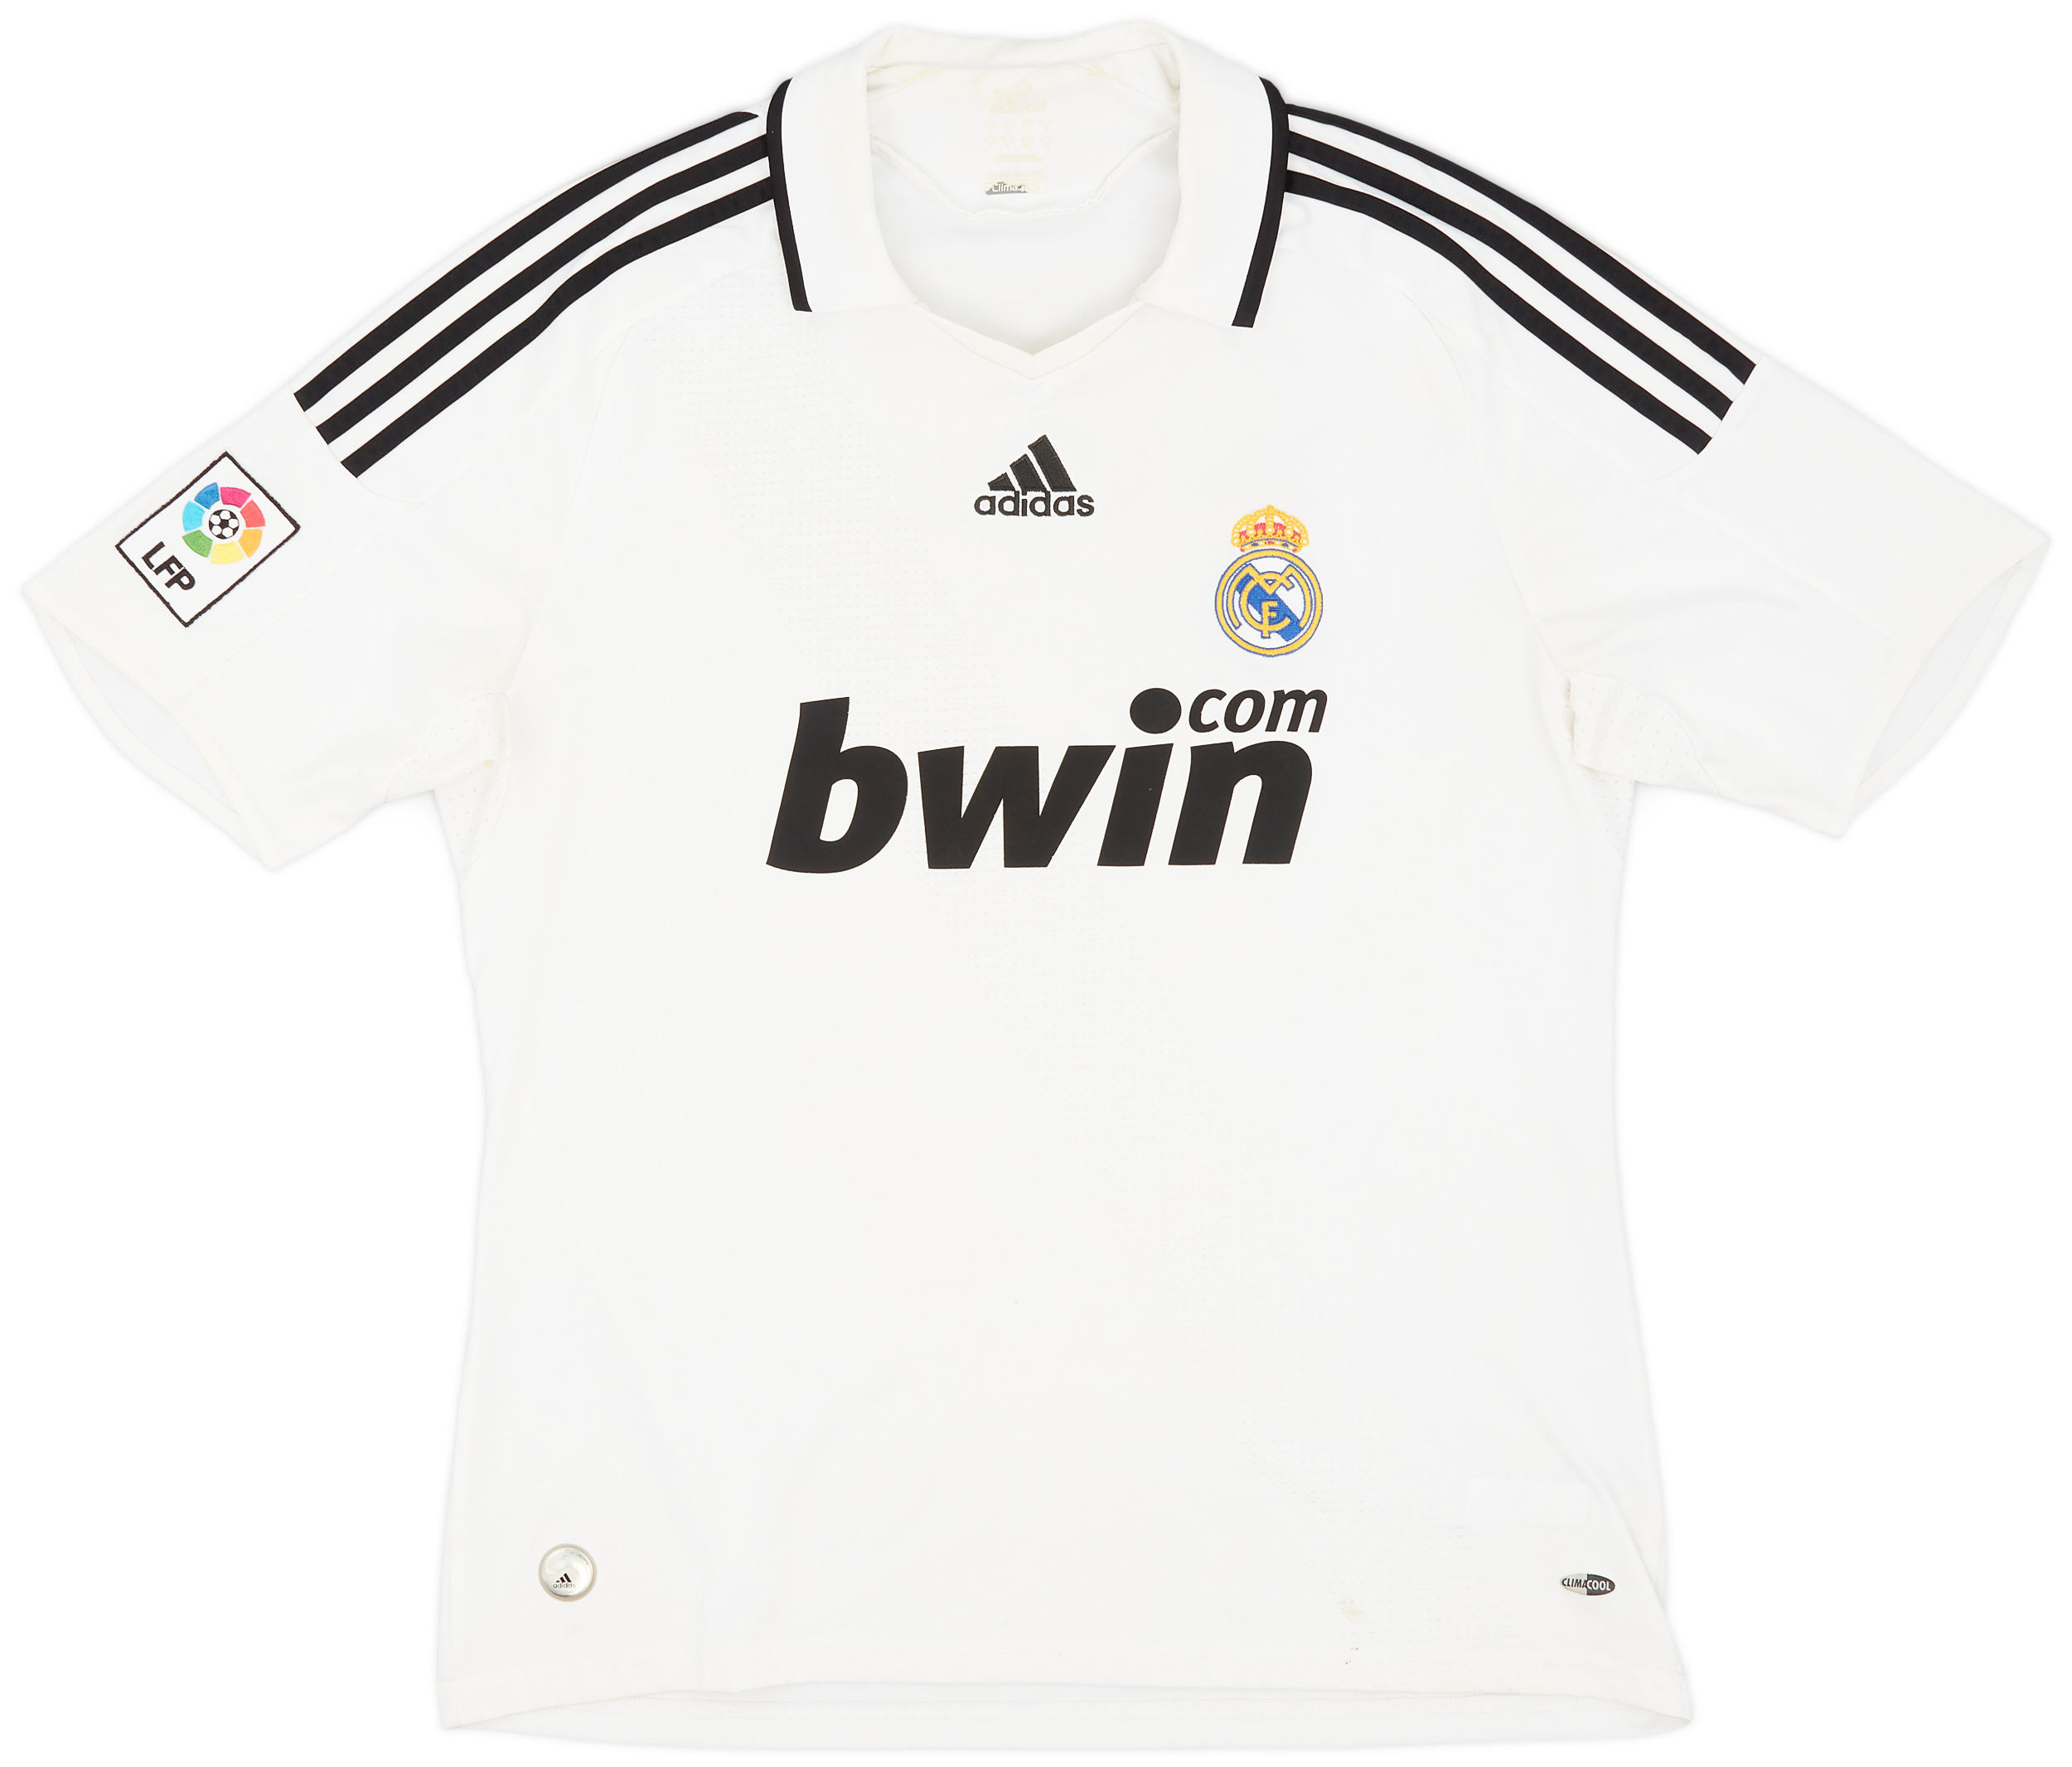 2008-09 Real Madrid Home Shirt - 6/10 - ()